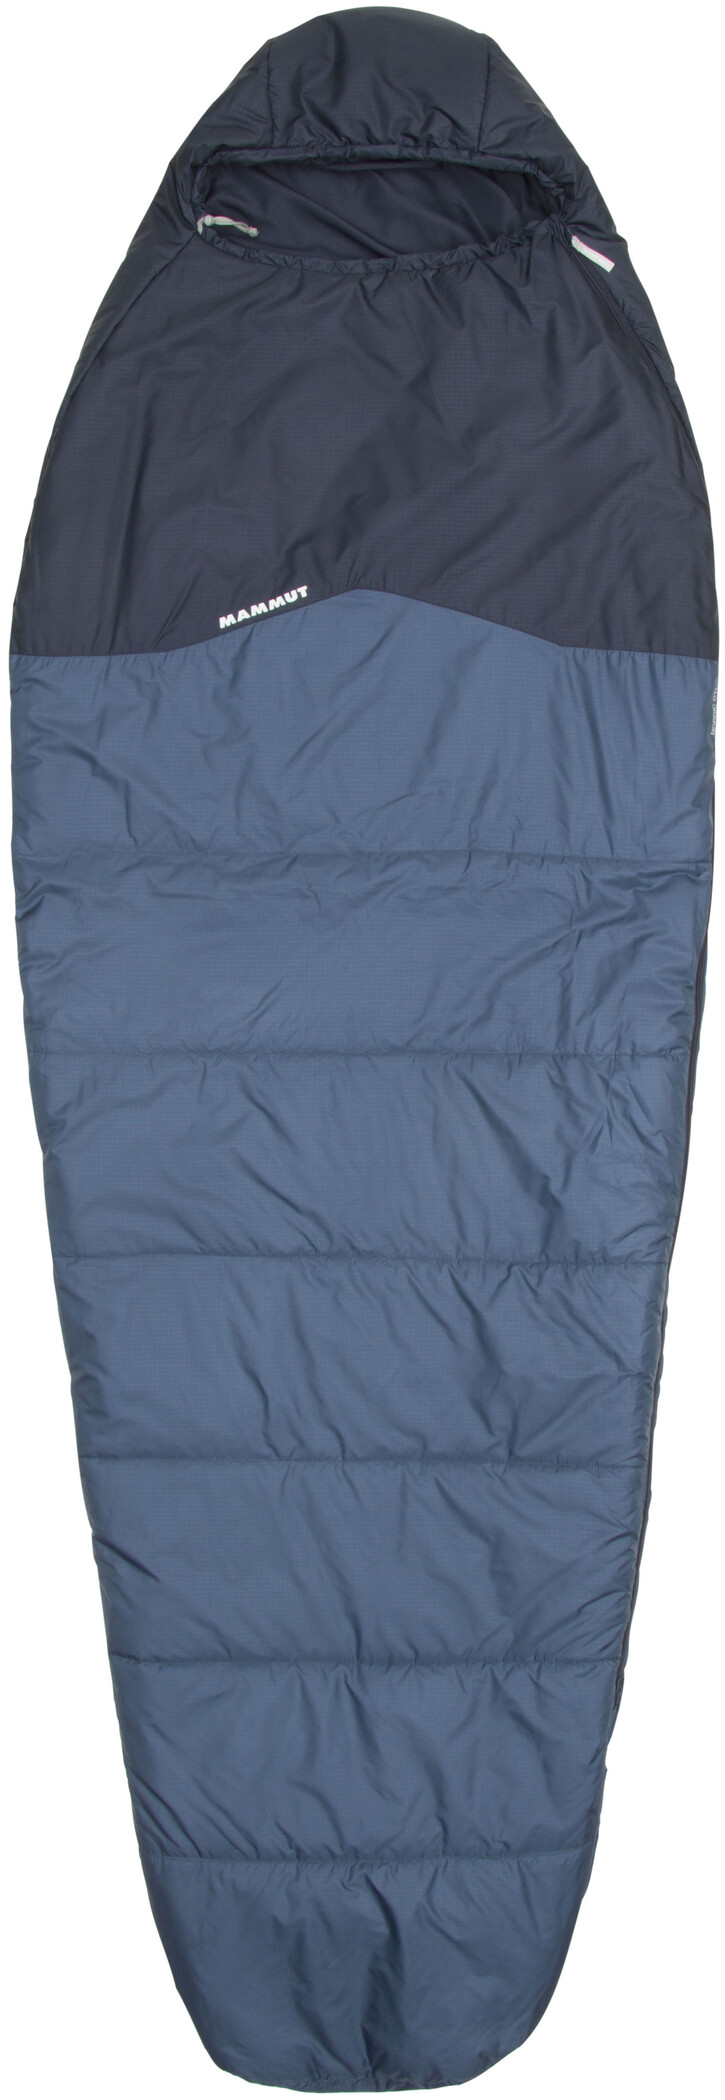 MammutNordic OTI Spring Schlafsack 195cm blau